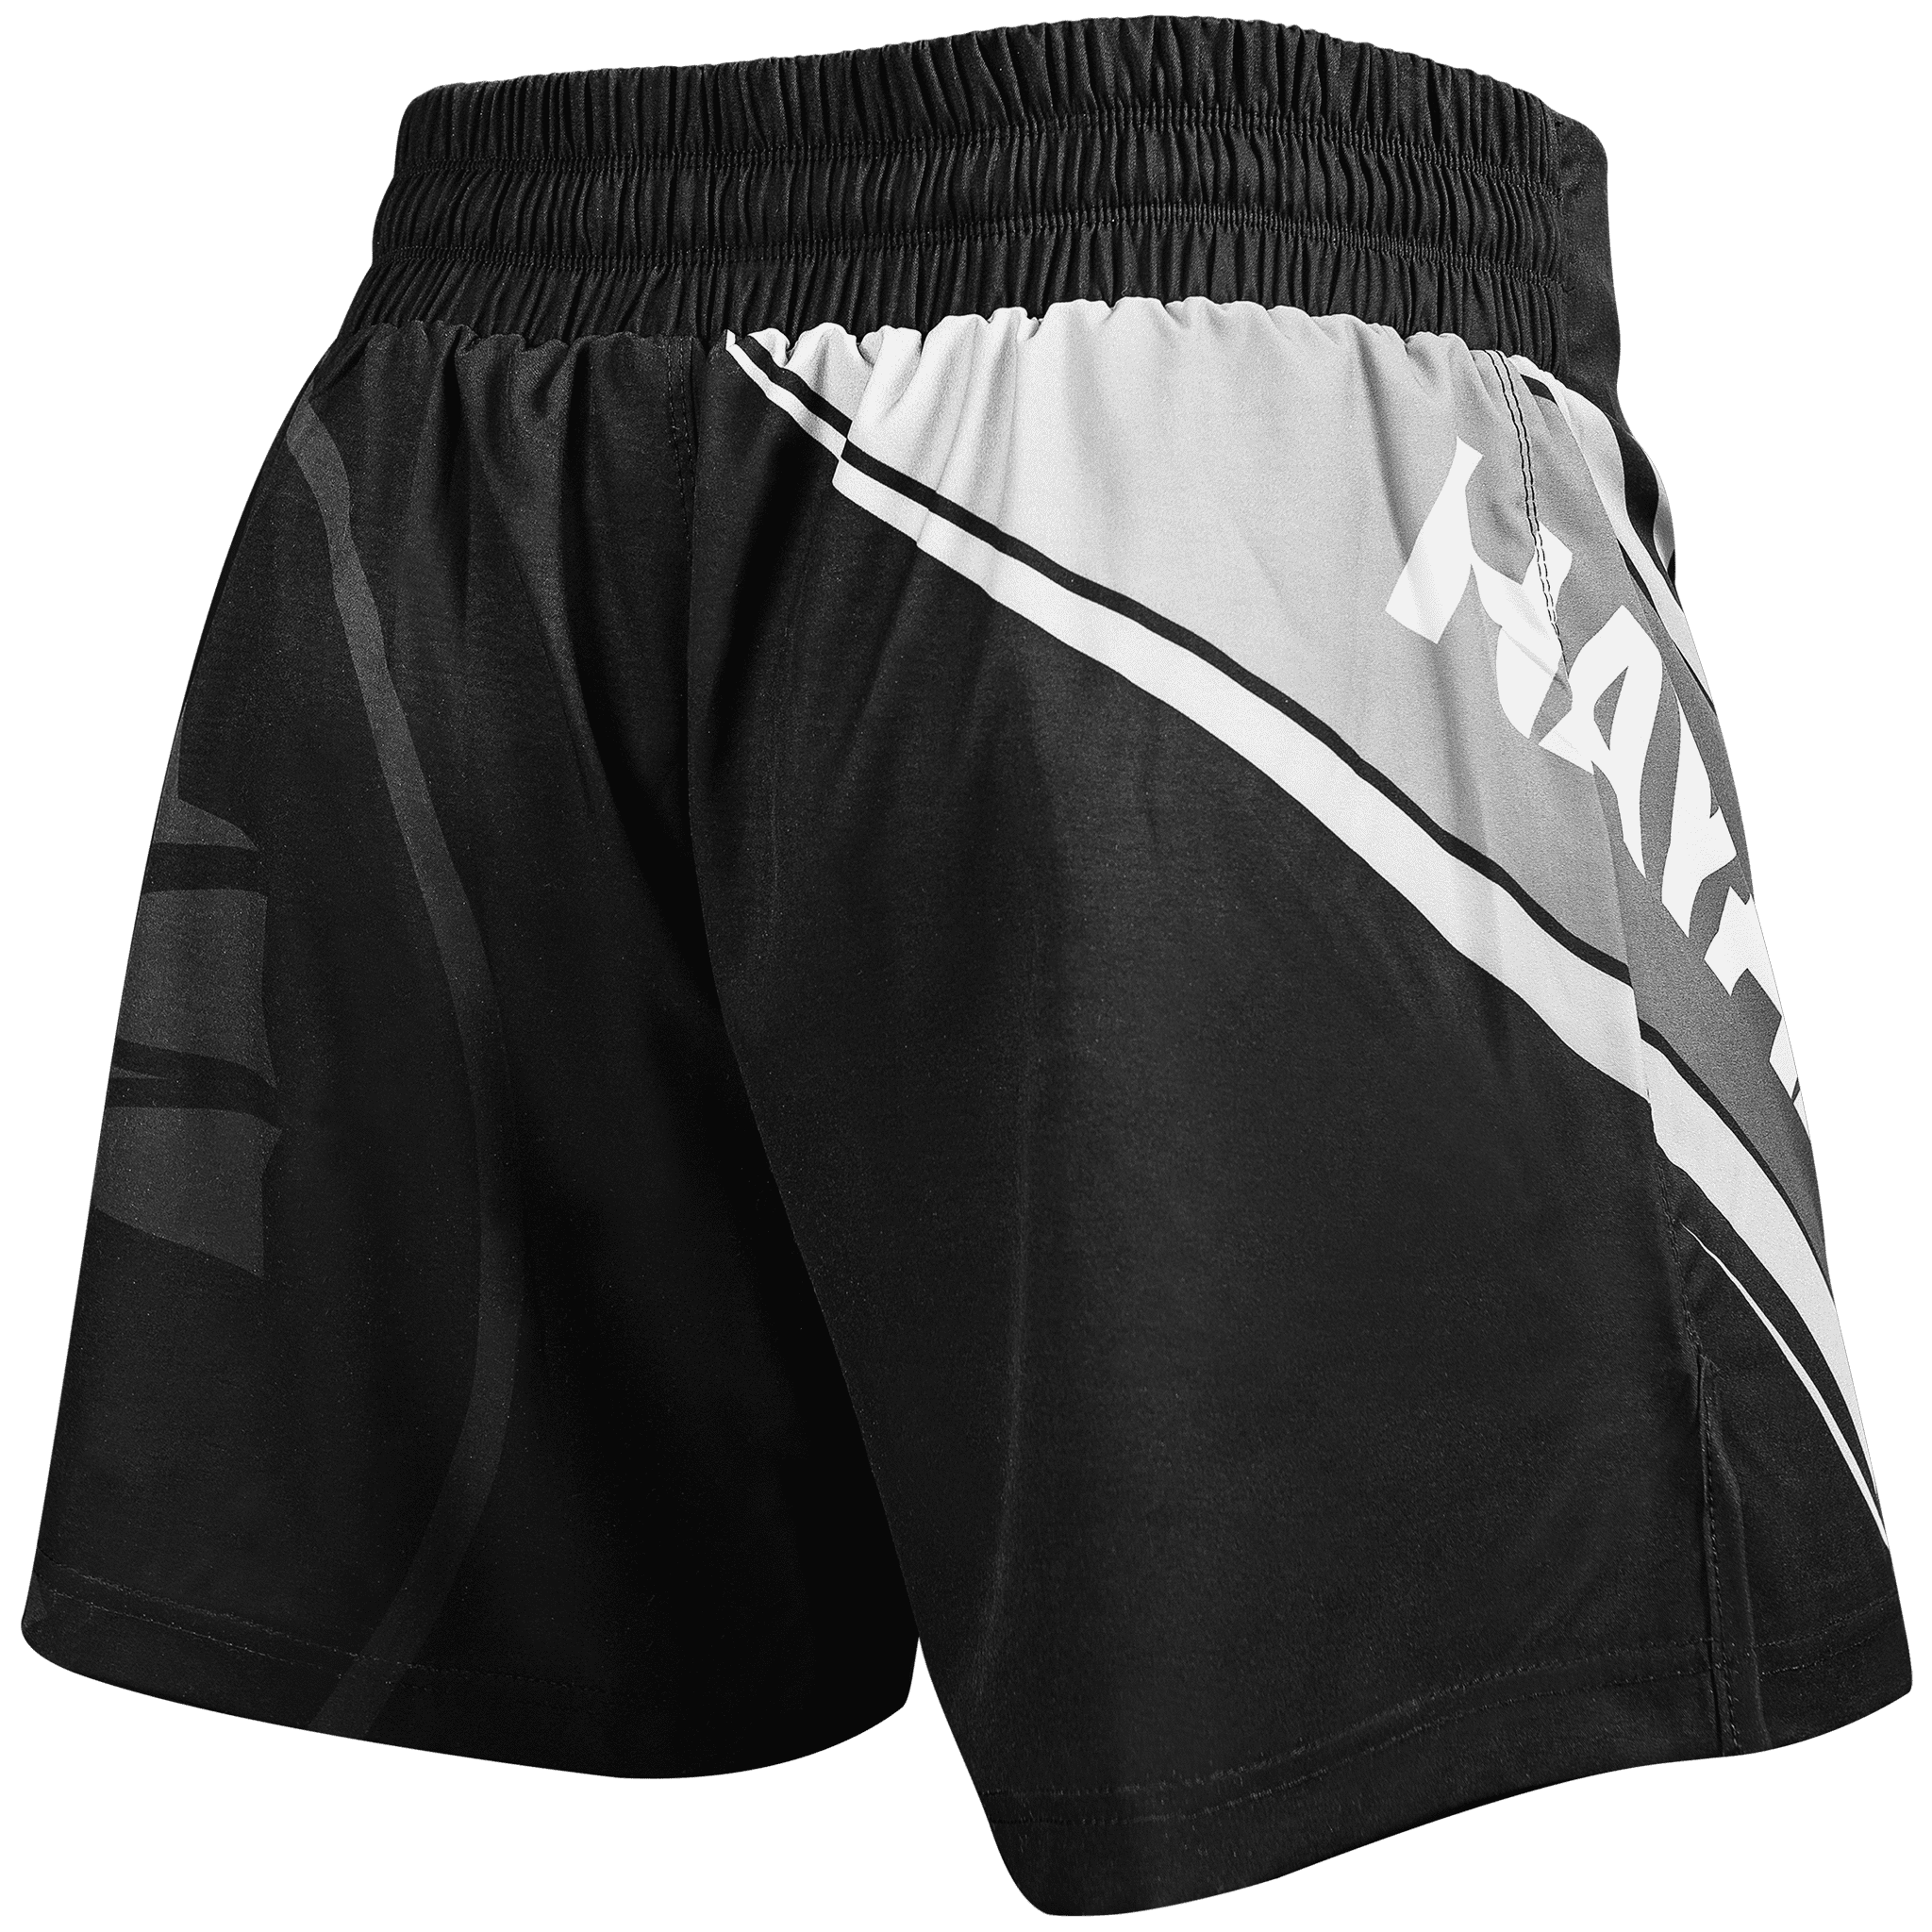 30 Gray/White Small Hayabusa Kickboxing MMA Shorts - Free Shipping 